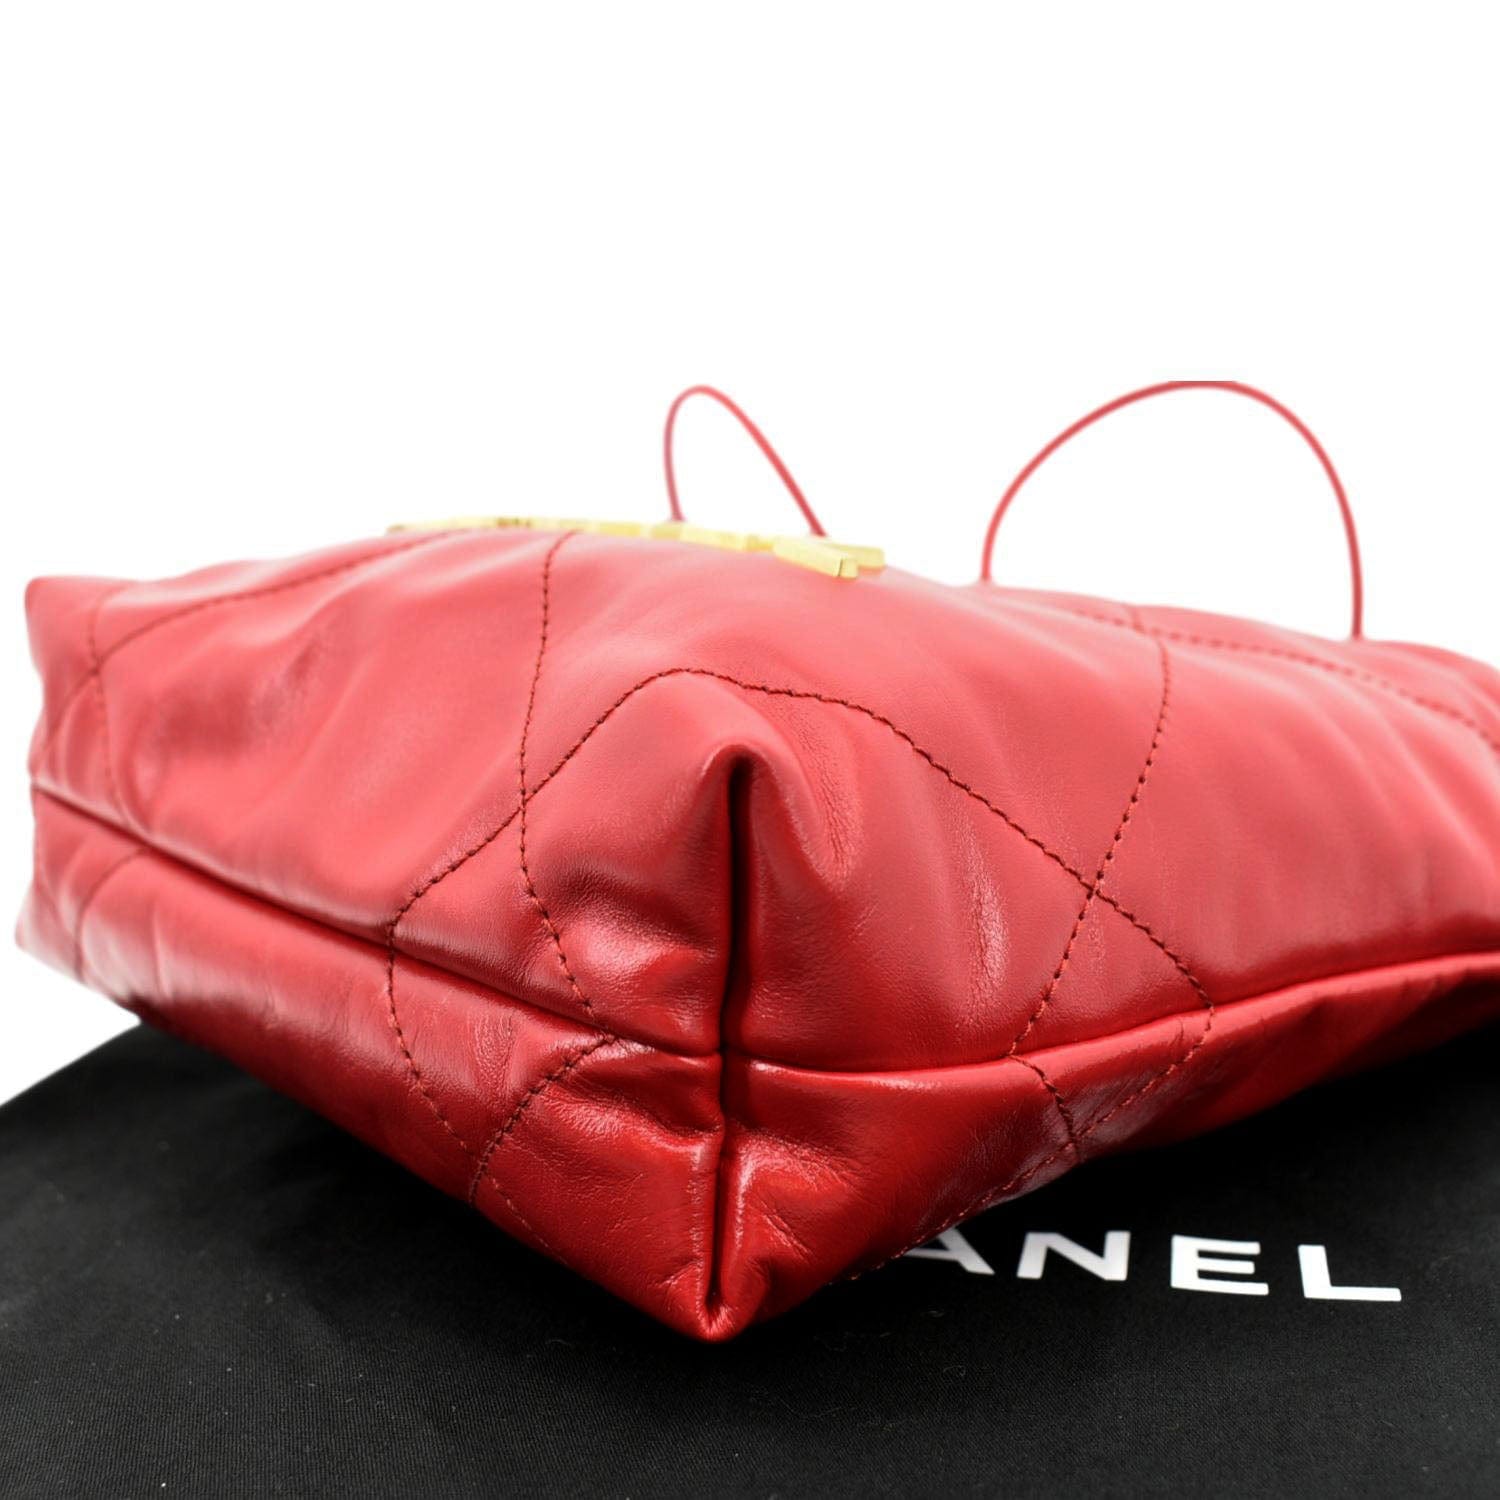 Chanel The Chanel 22 Mini Handbag